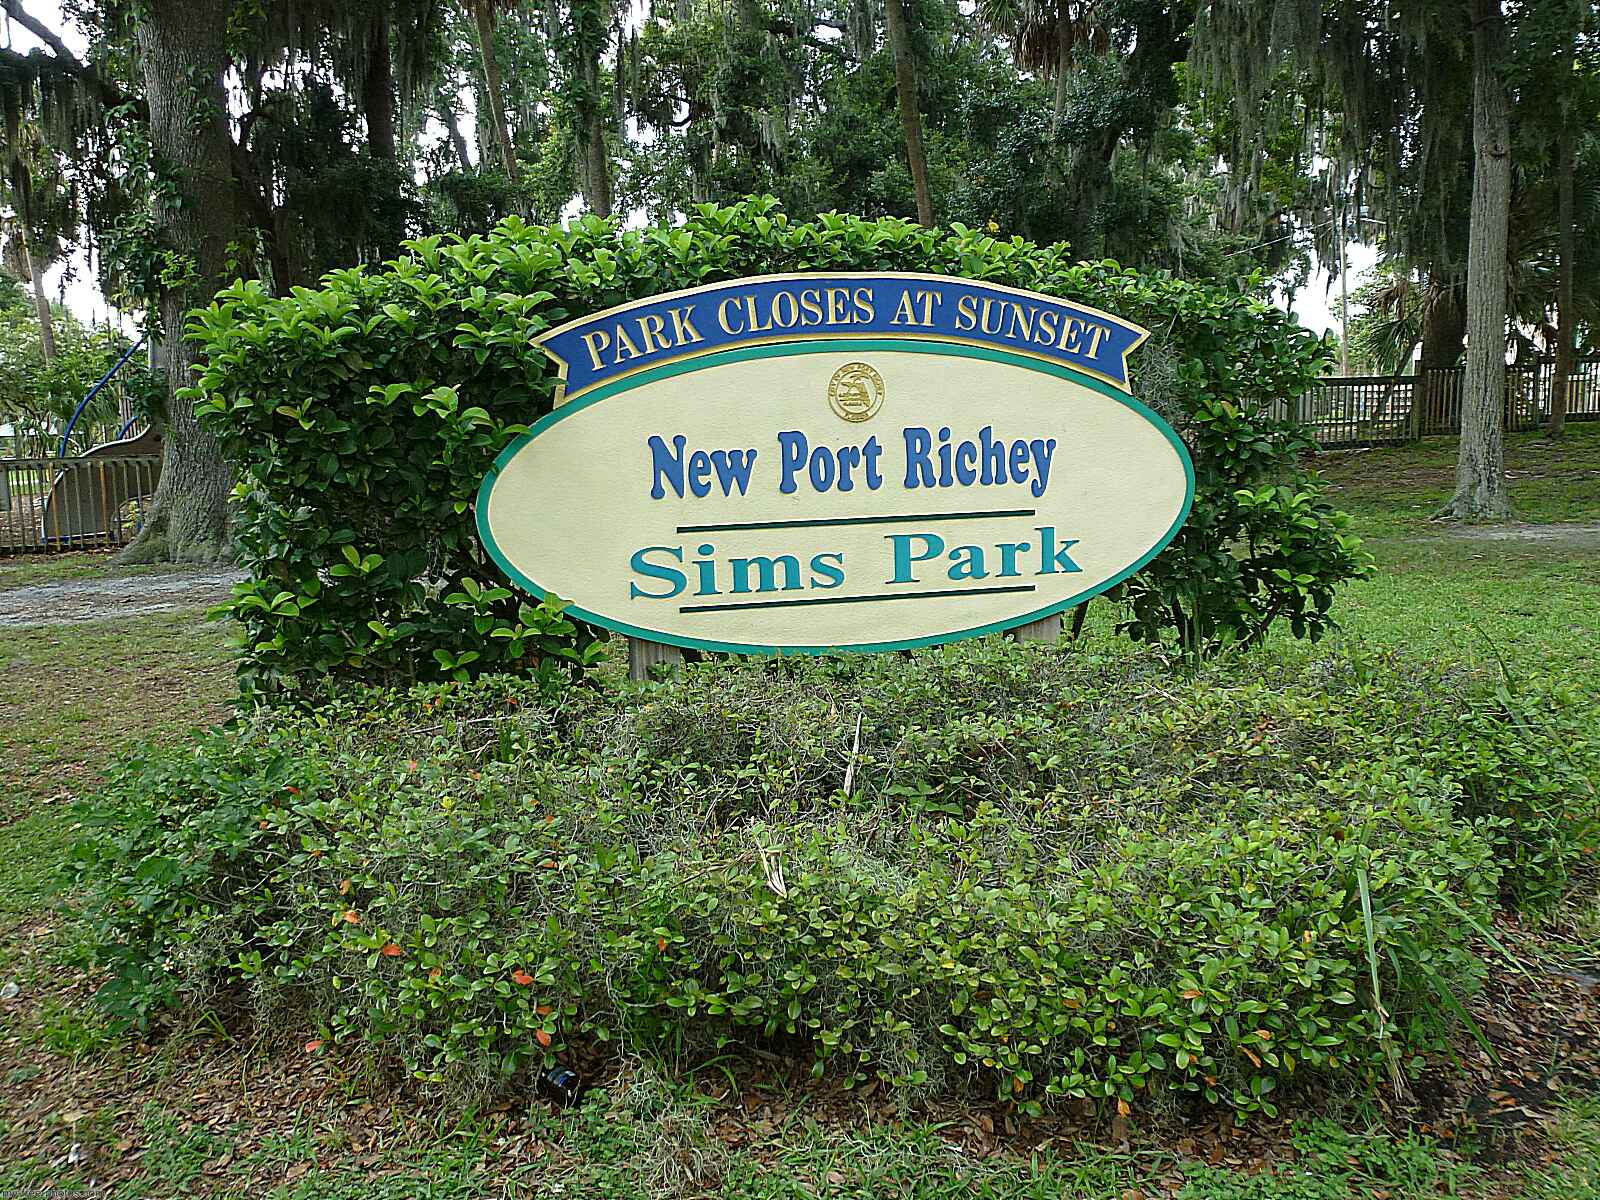 Newport richey,Sims Park